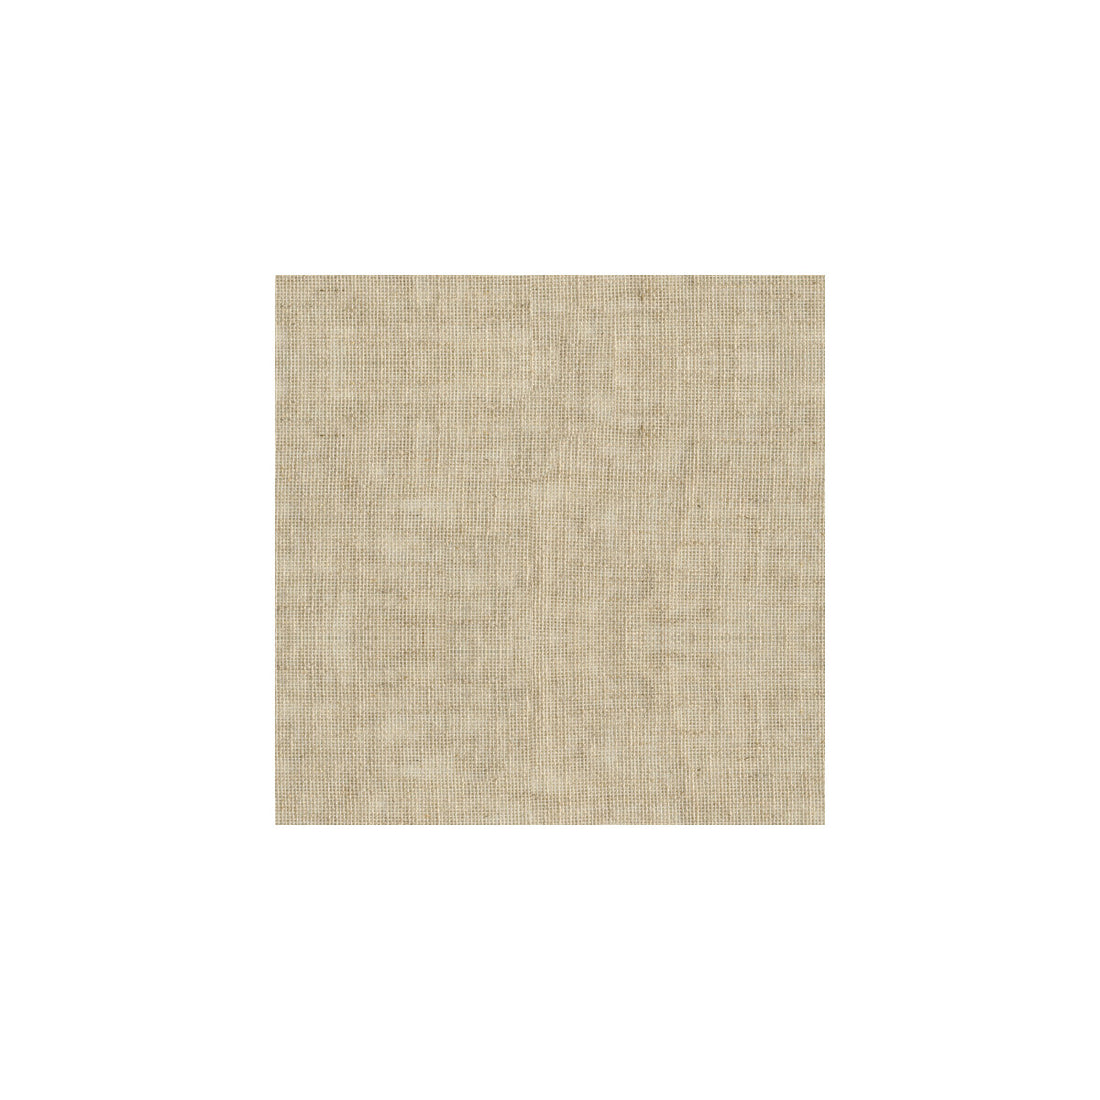 Kravet Basics fabric in 3686-16 color - pattern 3686.16.0 - by Kravet Basics in the Gis collection